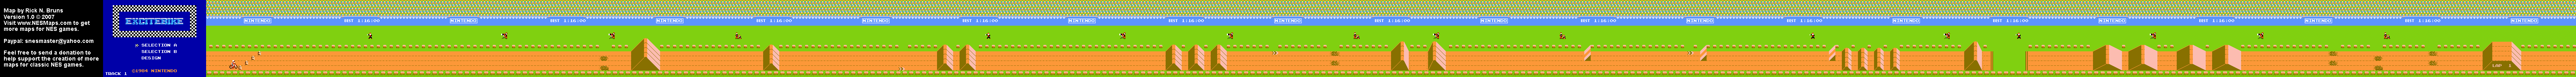 Excitebike - Track 1 - Nintendo NES Map